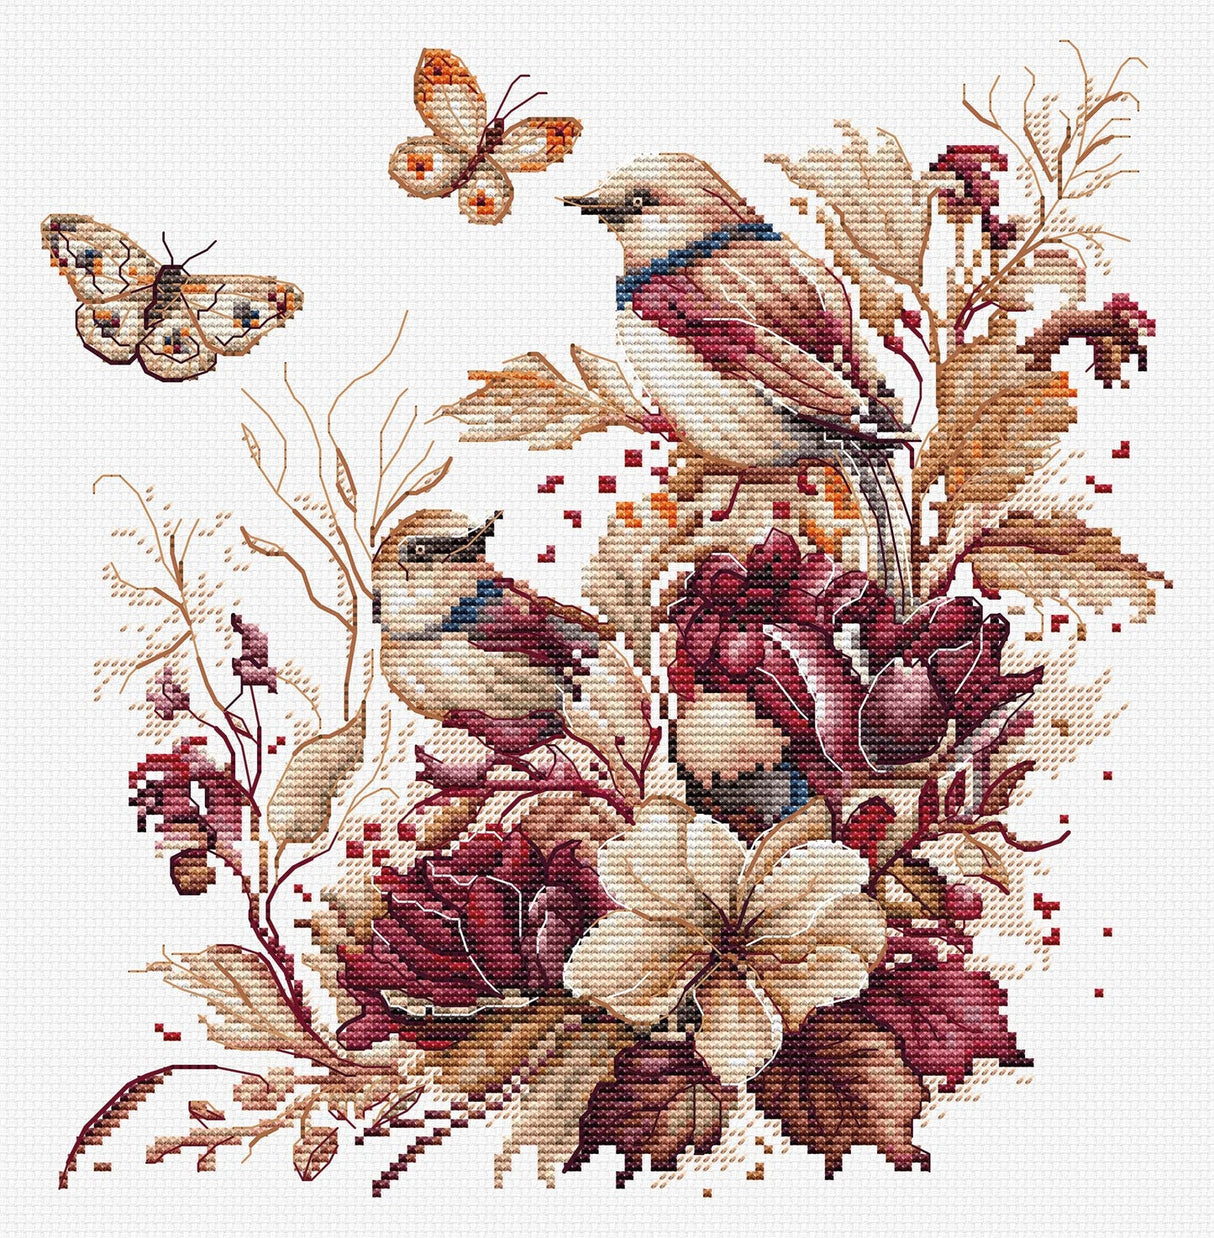 Cross Stitch Kit - The Birds-Autumn - B2419 Luca-S